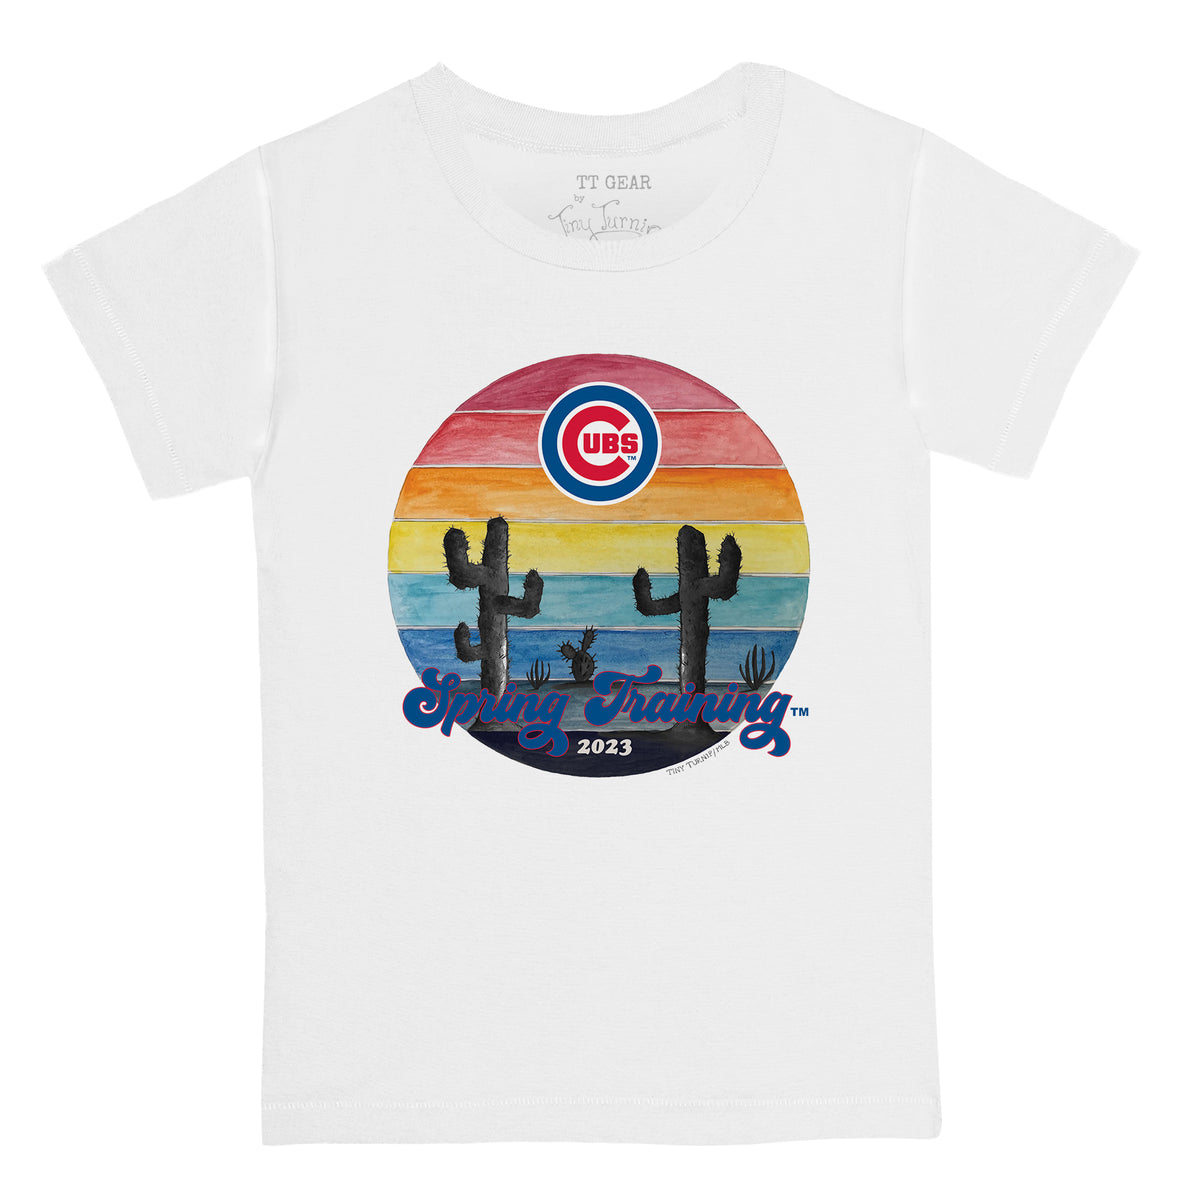 47 Chicago Cubs Black Match Short Sleeve Fashion T Shirt